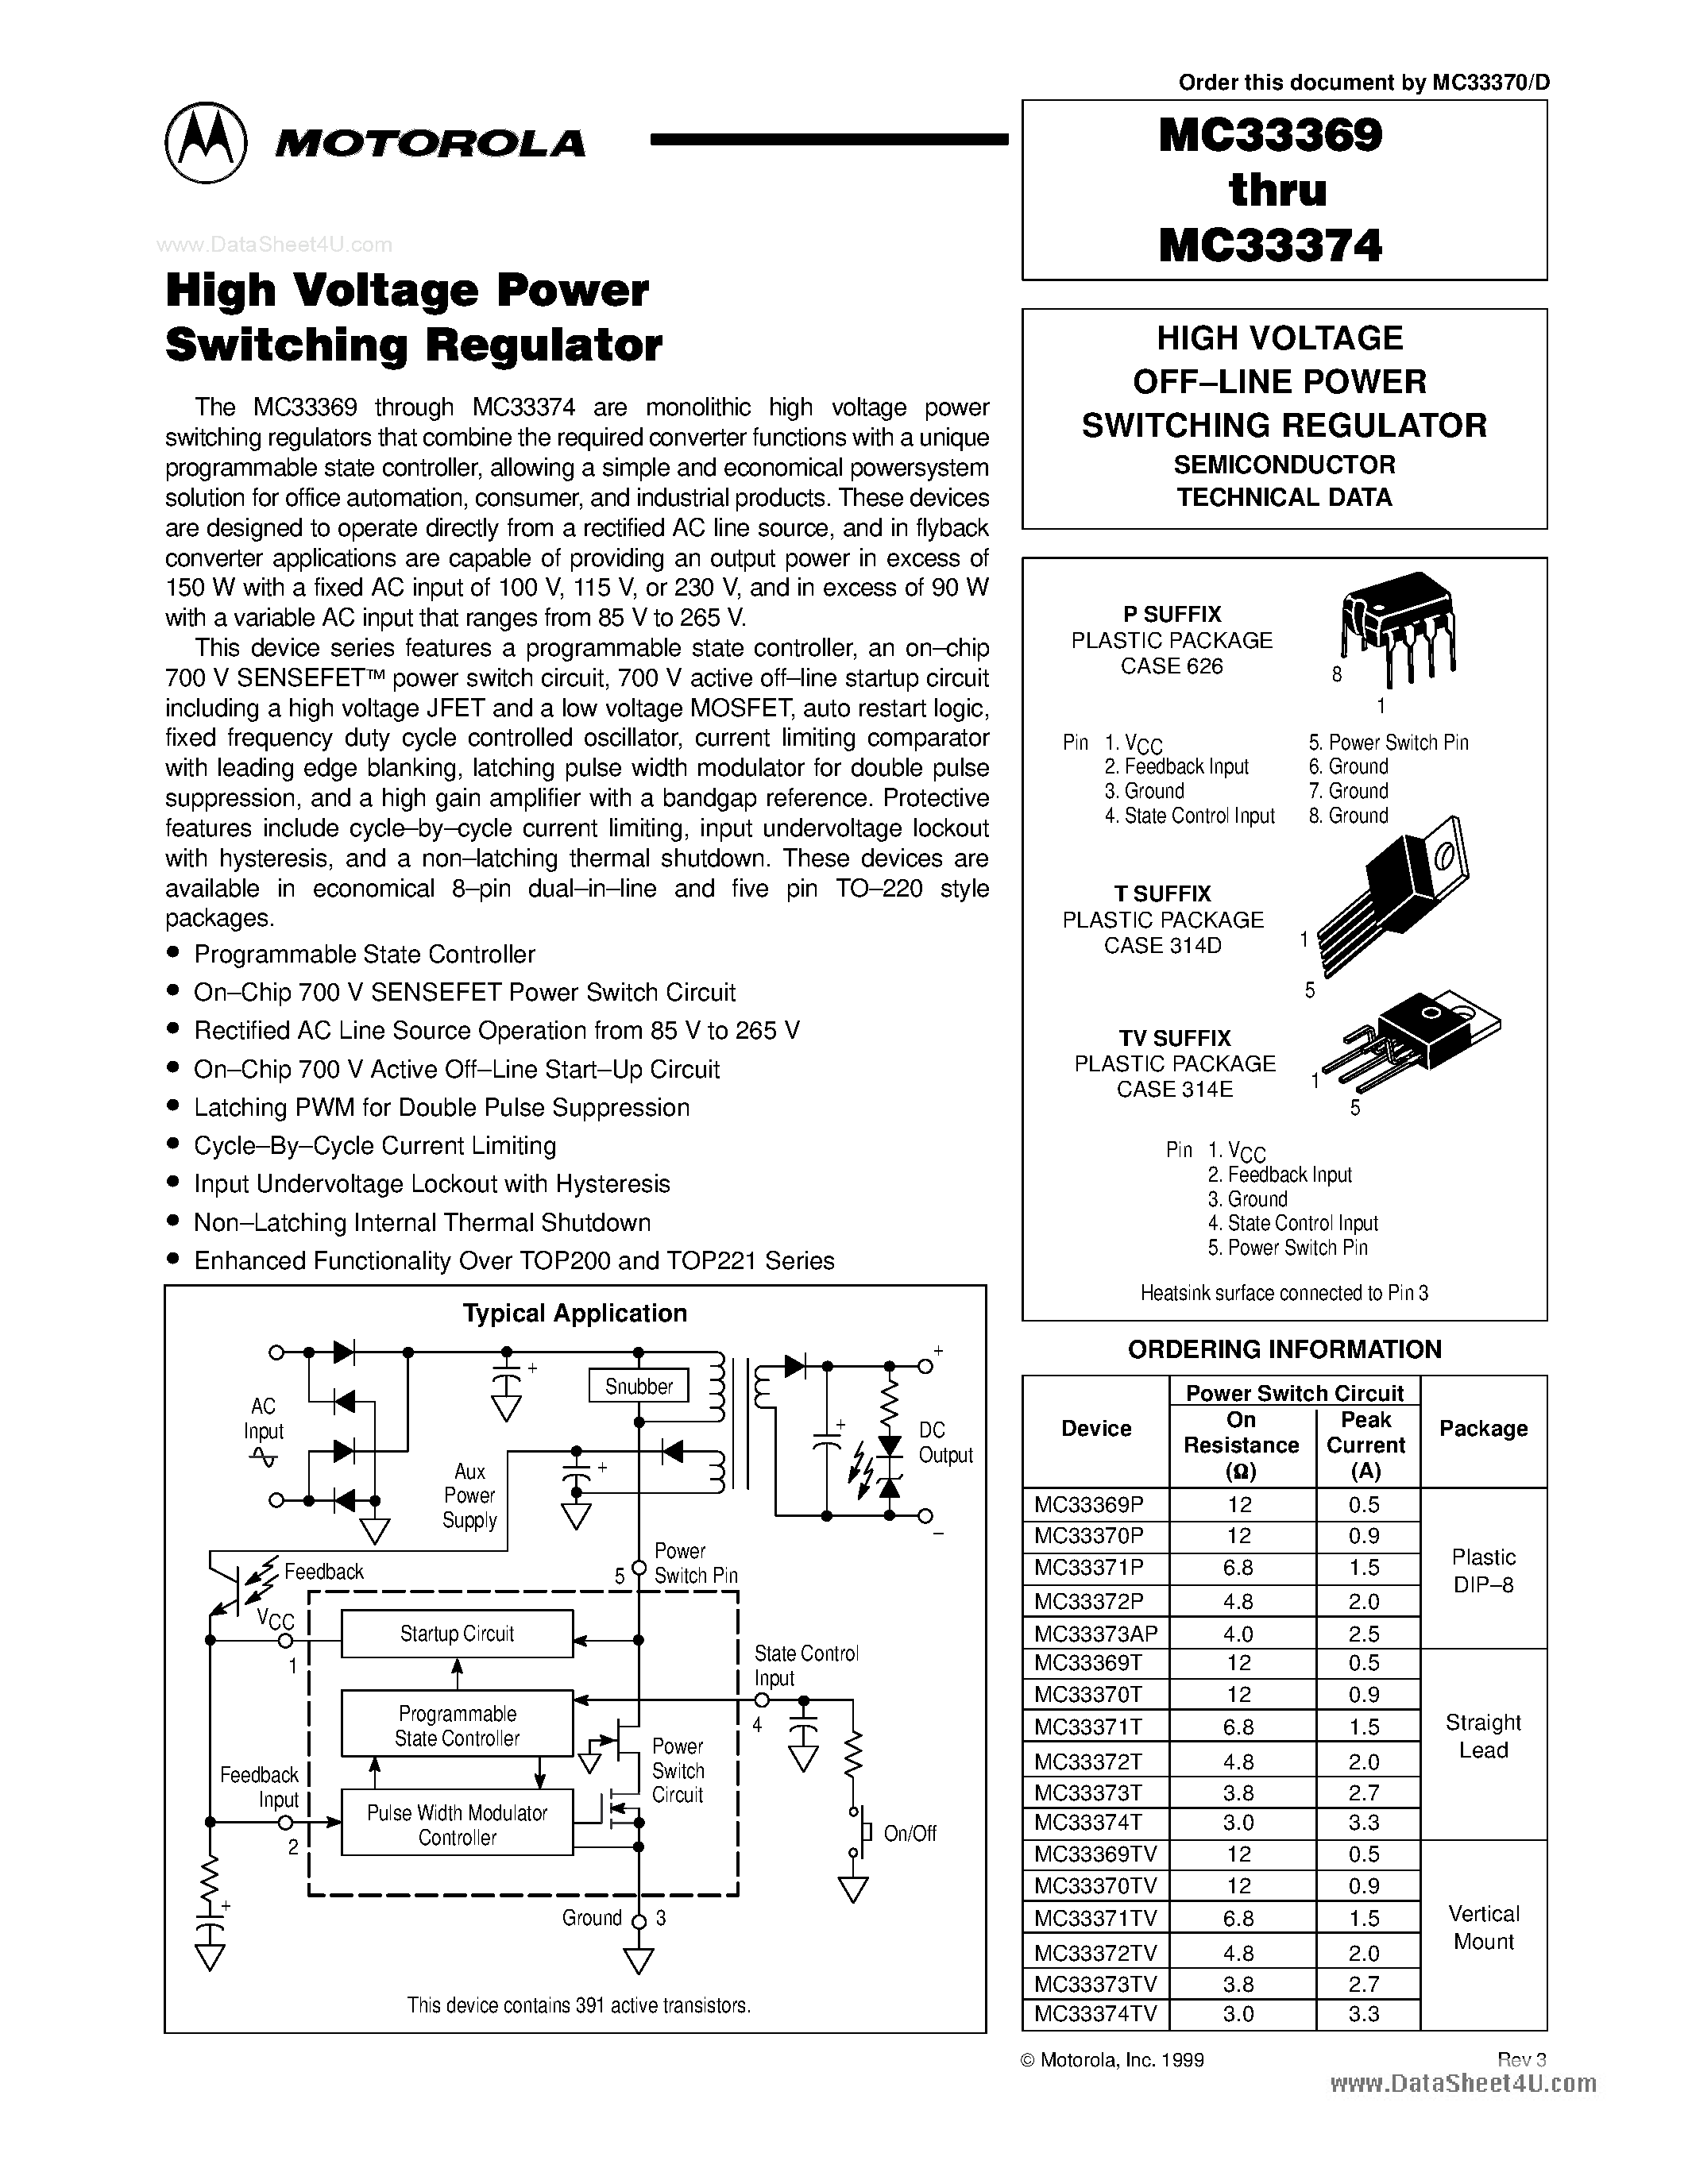 Даташит MC33369P - (MC33369 - MC33374) High Voltage Off Line Power Switching Regulator страница 1